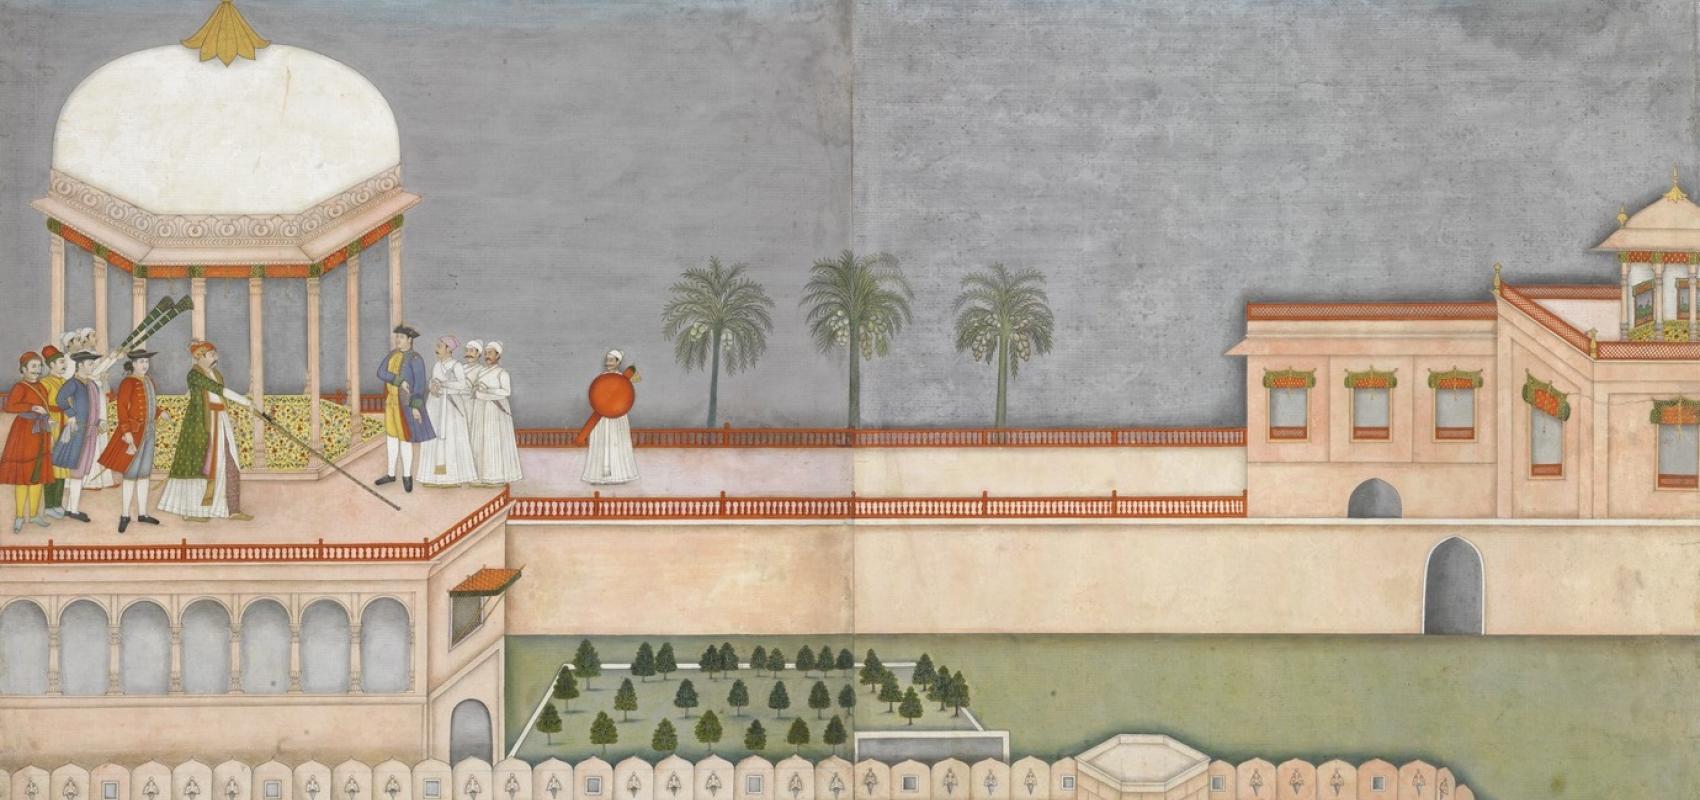  Le Nawab Shuja ud-Daula tire au mousquet de la terrasse de son palais - vers 1765 - Company School, Faizabad